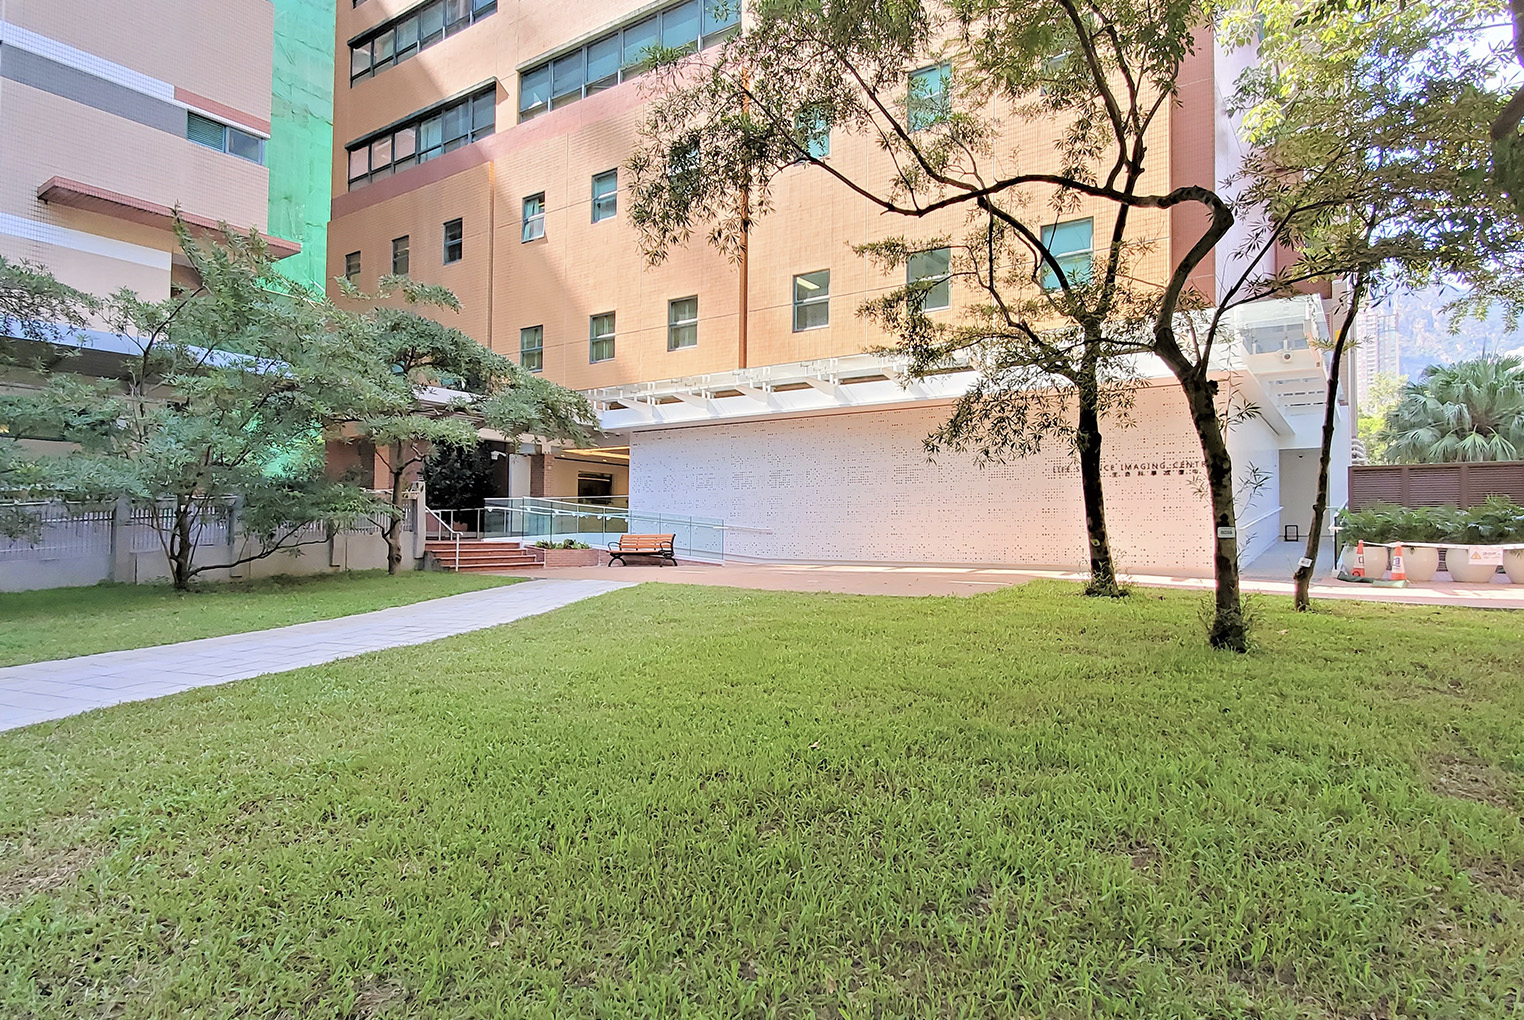 Lawn Area at Jockey Club School of Chinese Medicine Building